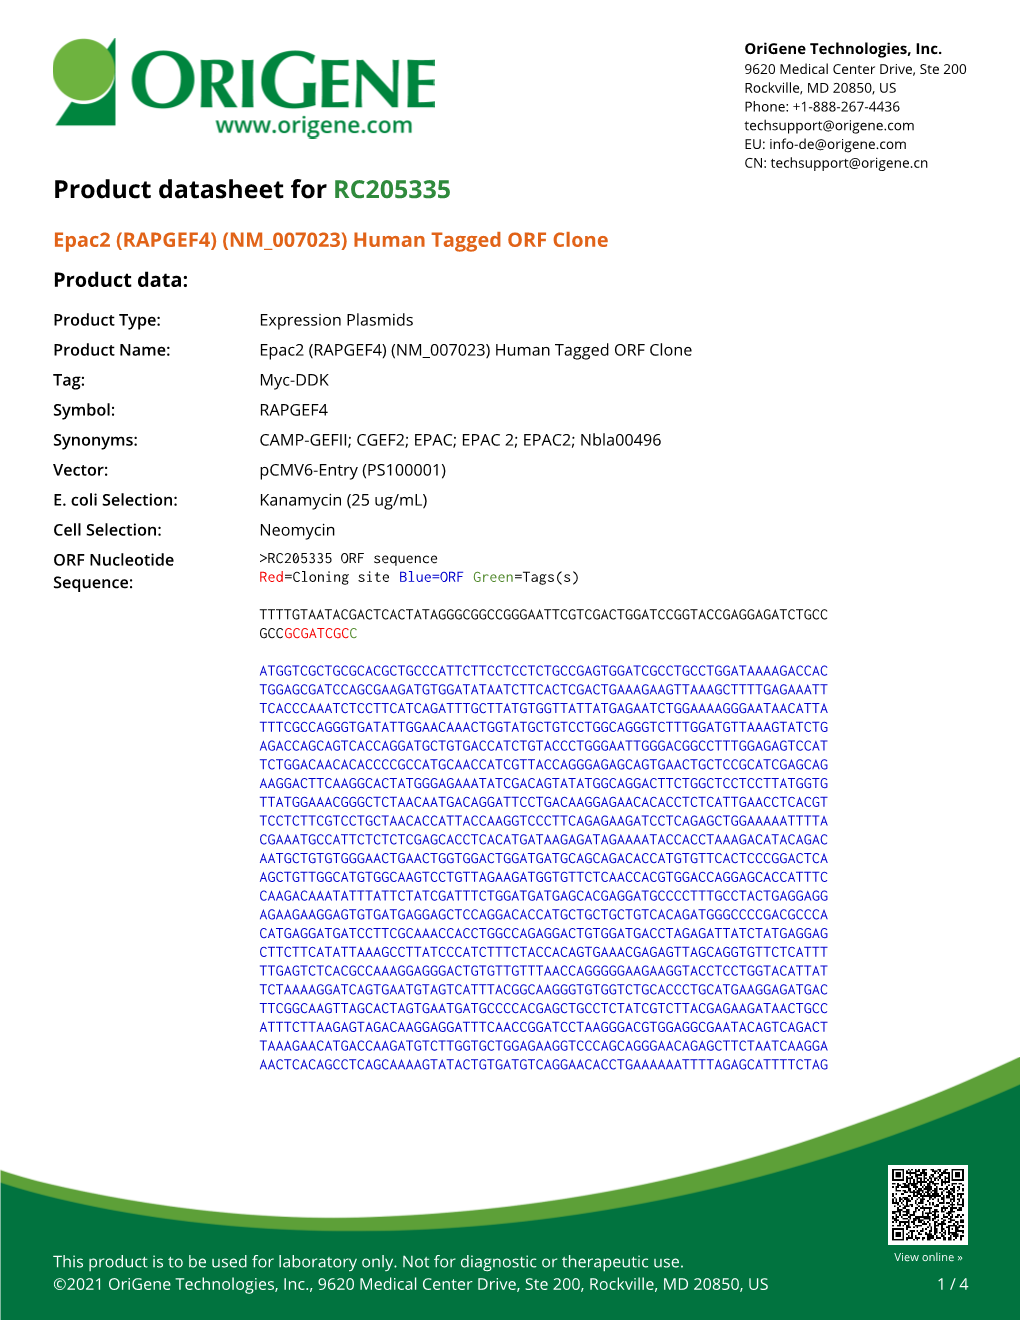 Epac2 (RAPGEF4) (NM 007023) Human Tagged ORF Clone Product Data